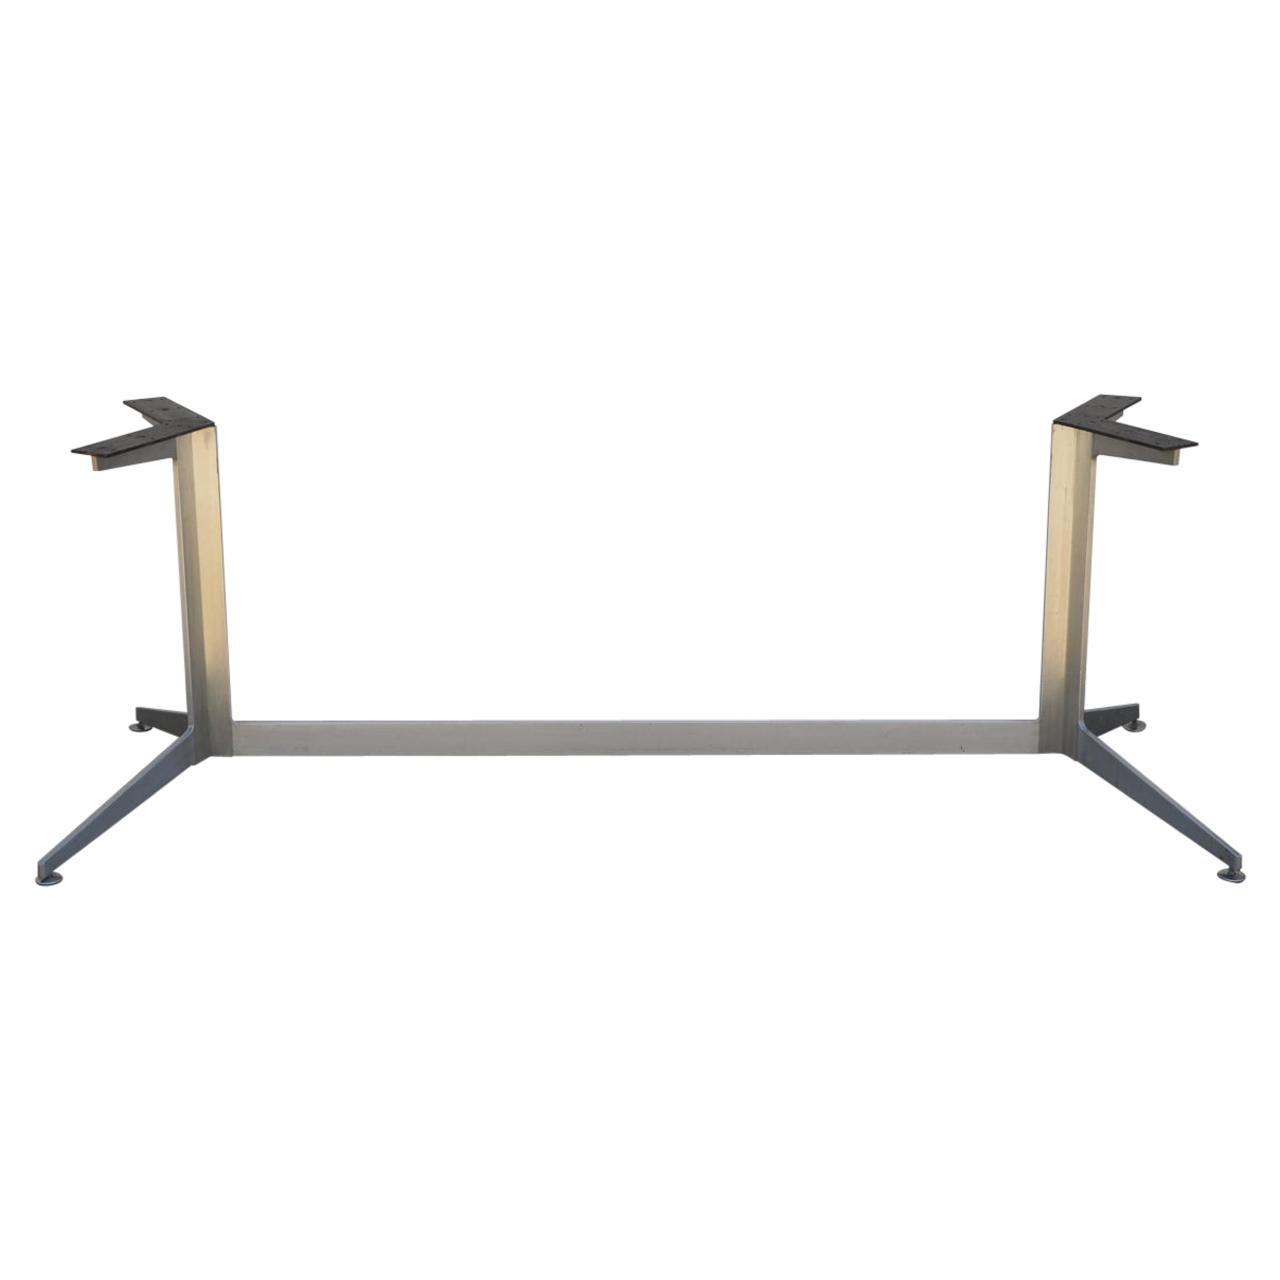 Table ou base de bureau simple minimaliste en aluminium poli épais